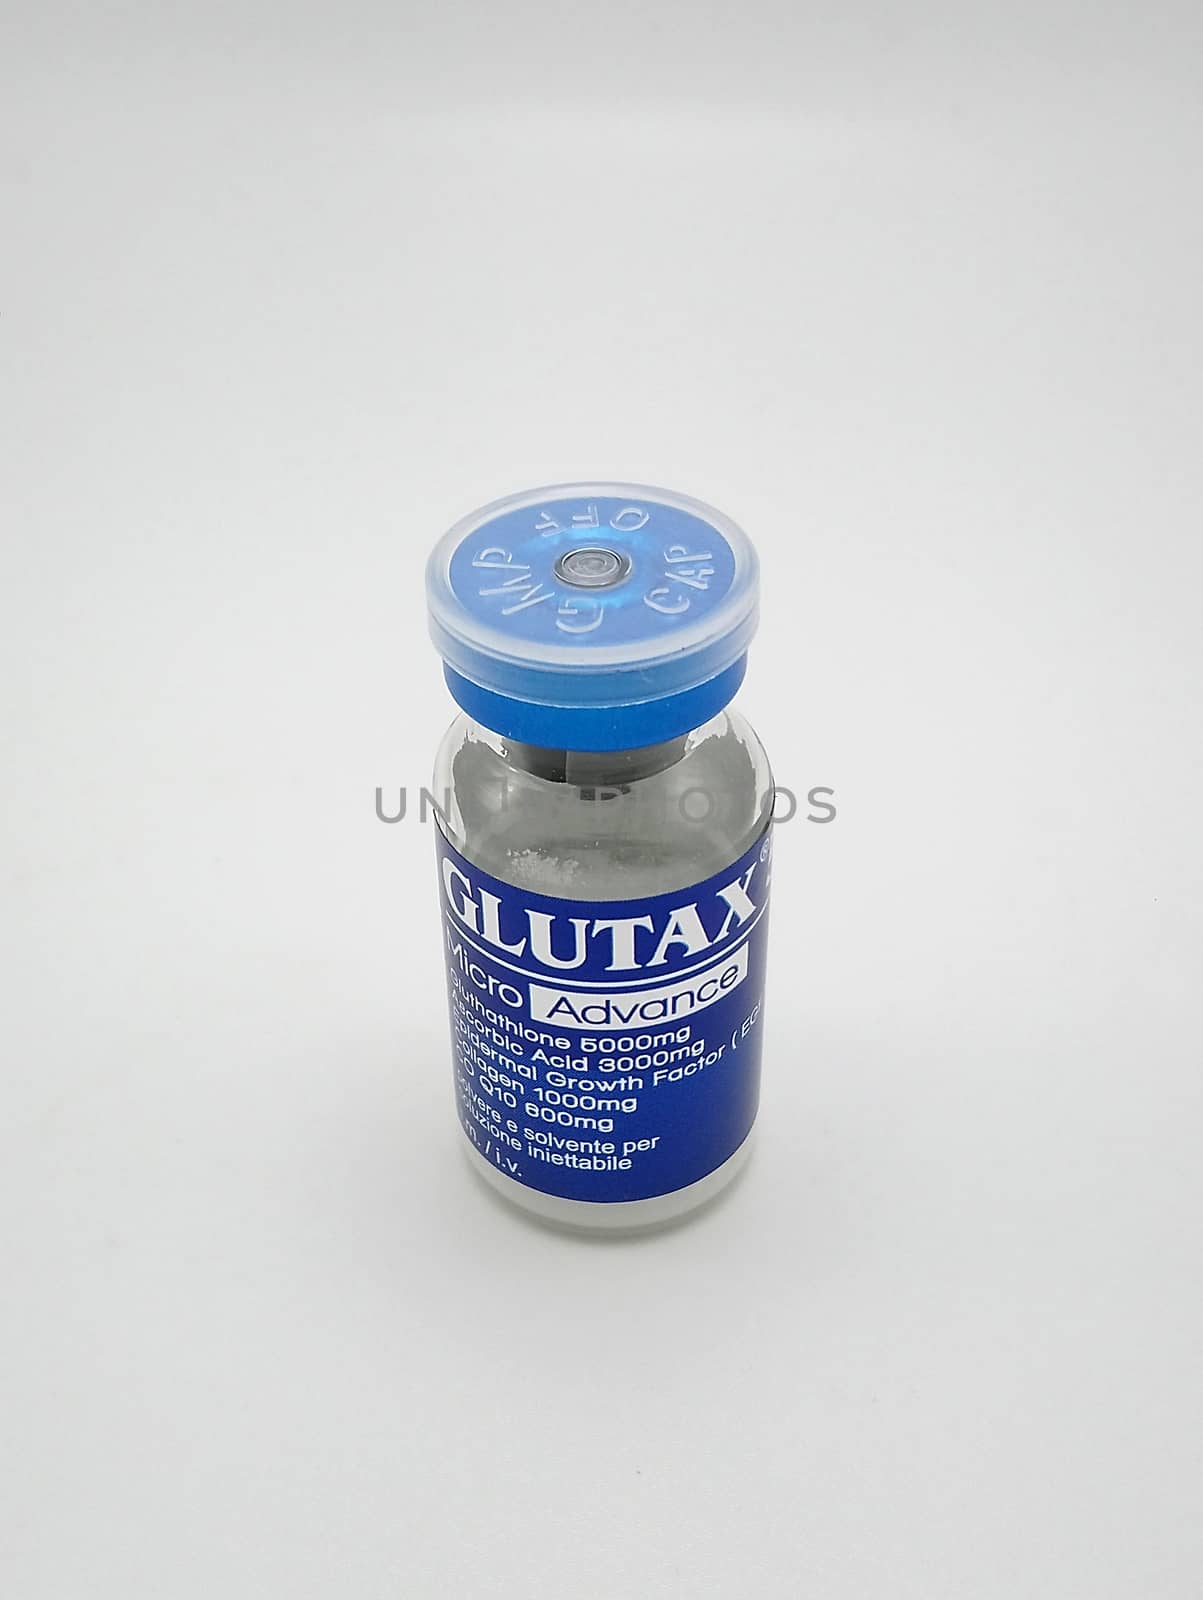 Glutax gluthathione vial in Manila, Philippines by imwaltersy